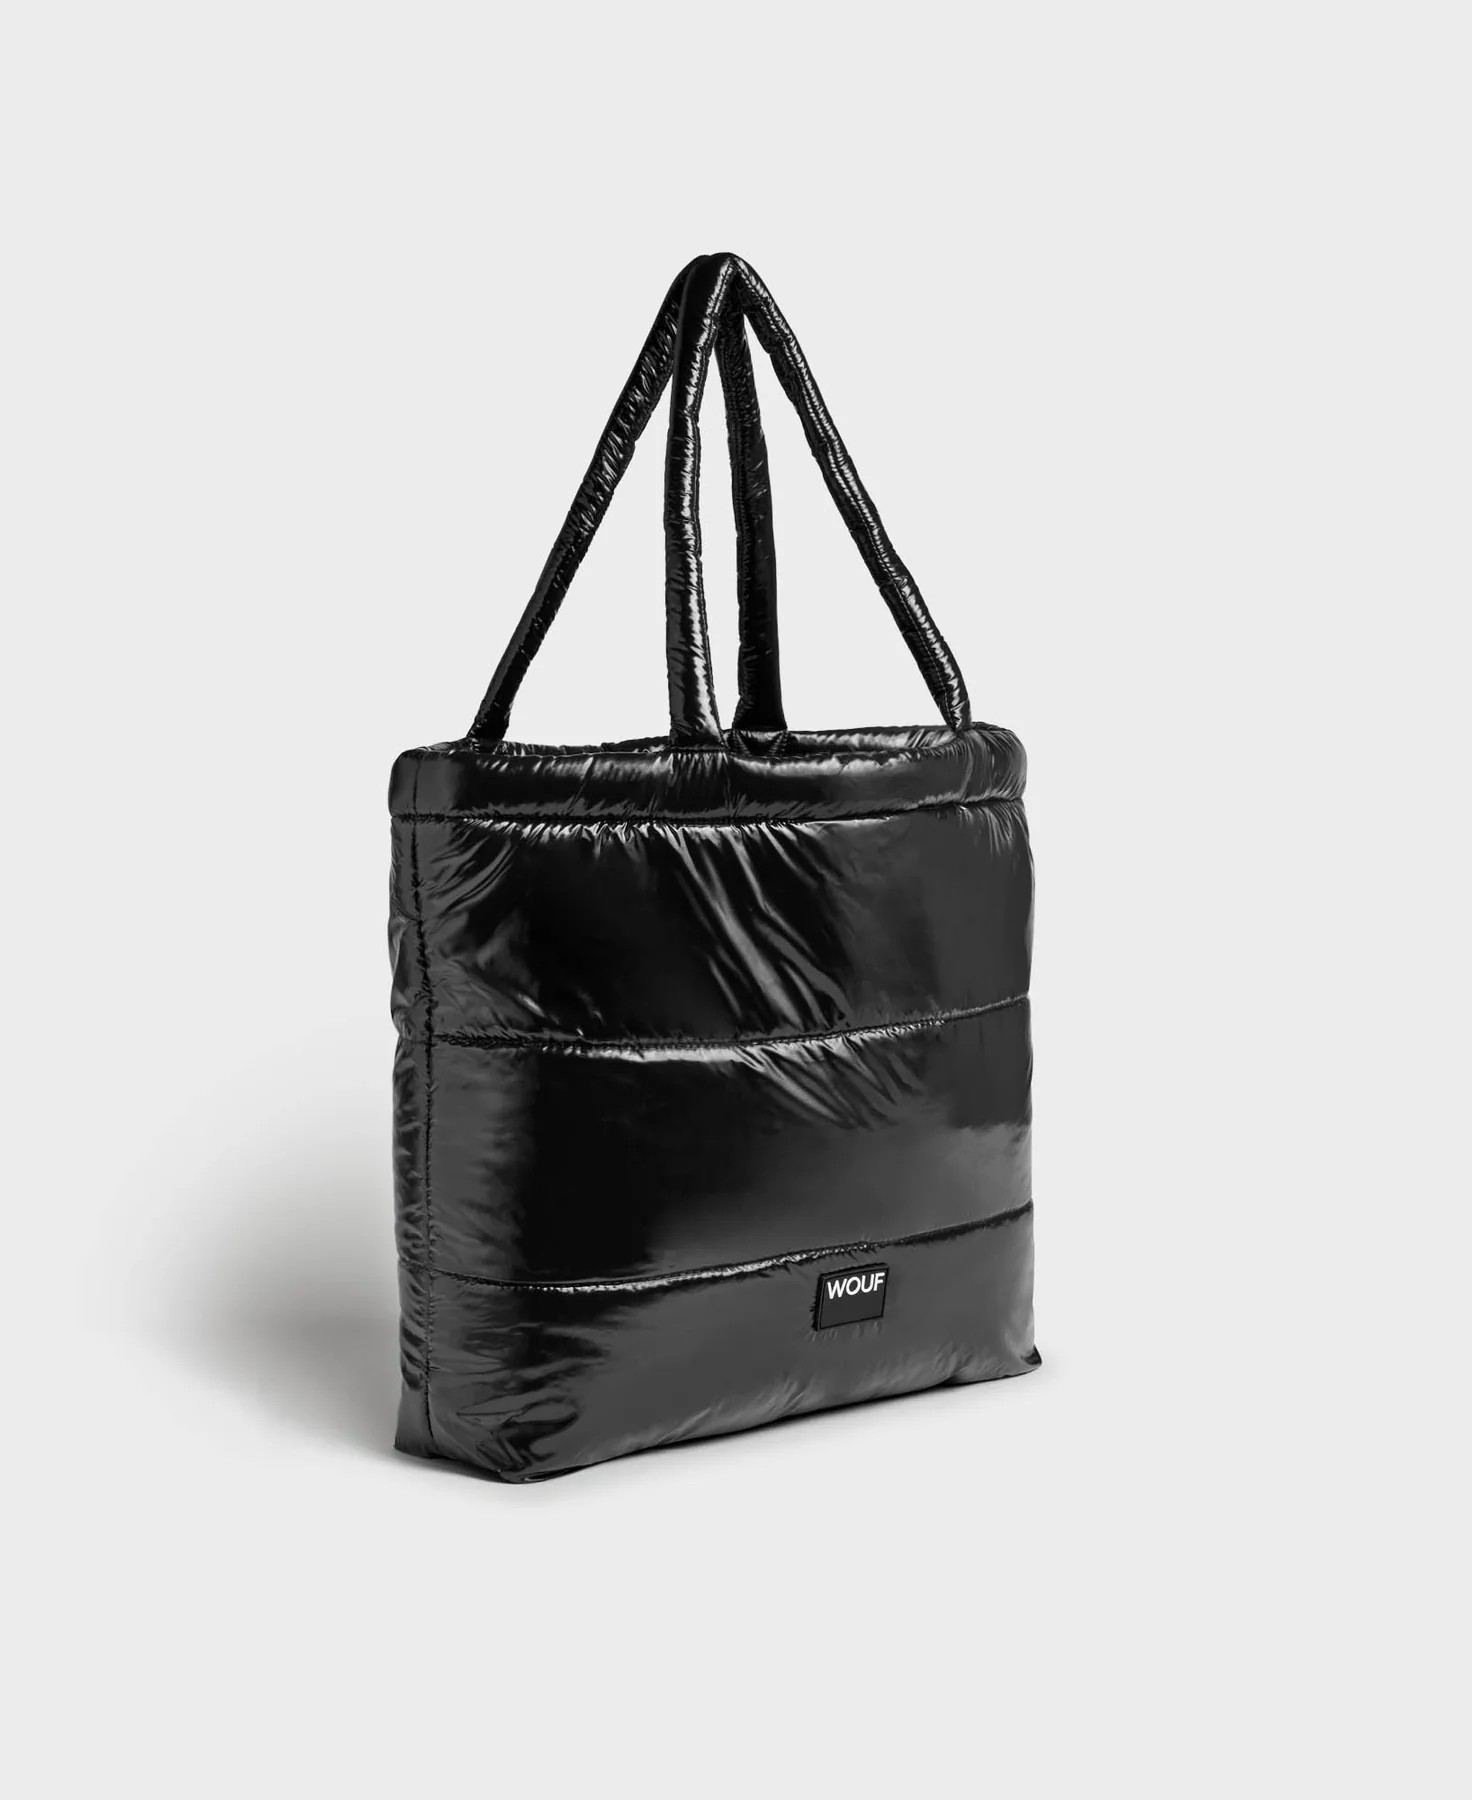 Wouf Black Glossy Tote Bag Omuz Çantası